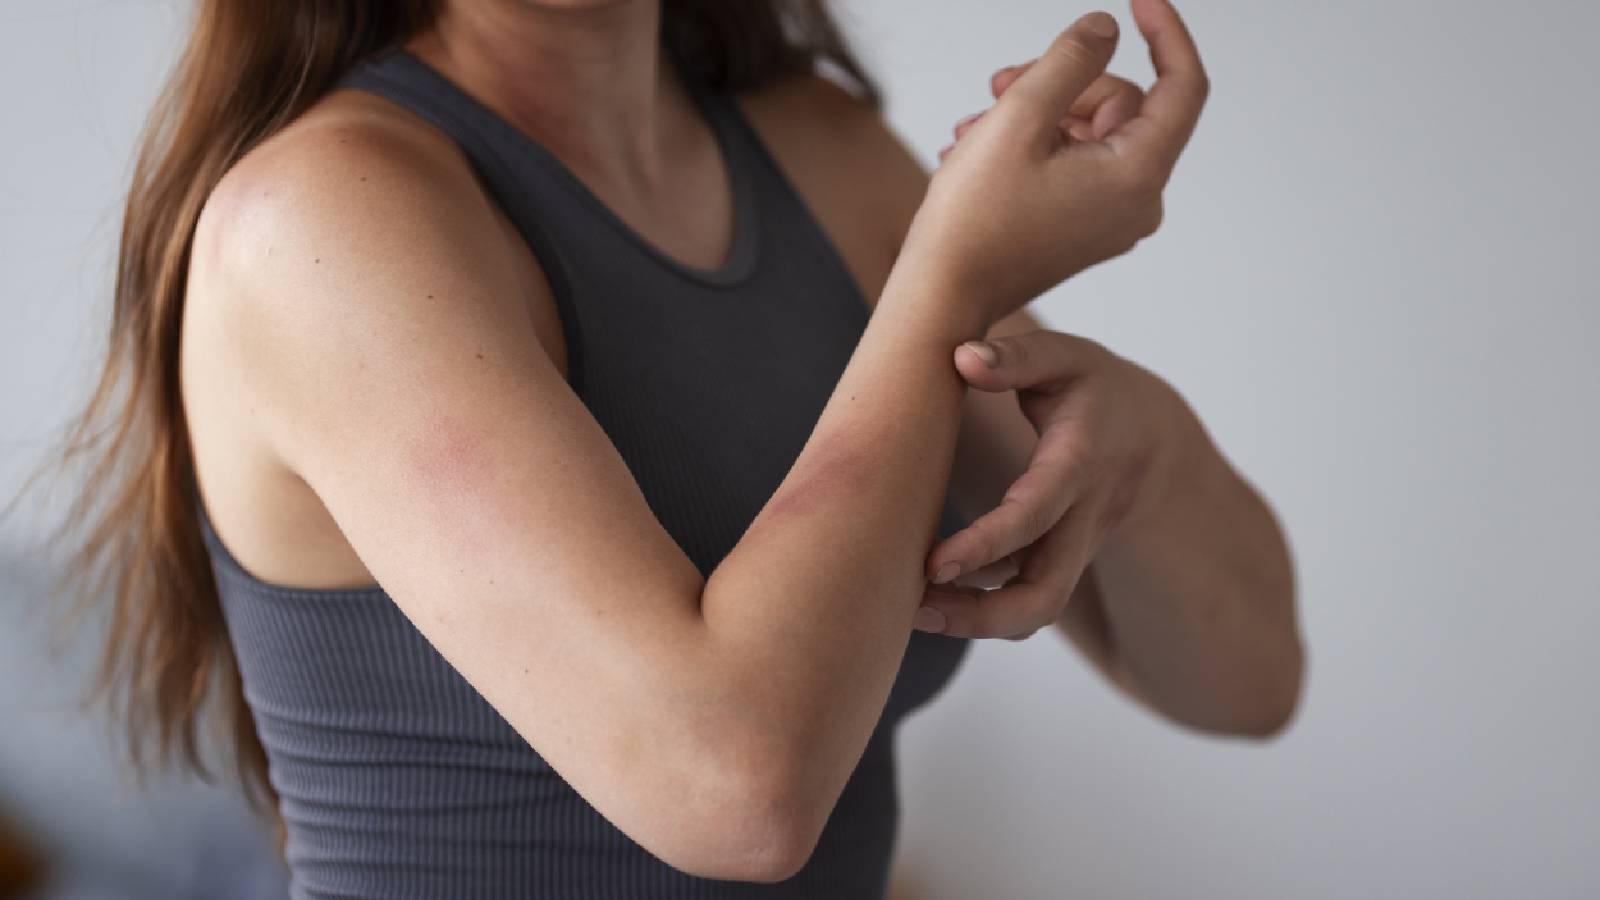 Skin rash appears due to perfume